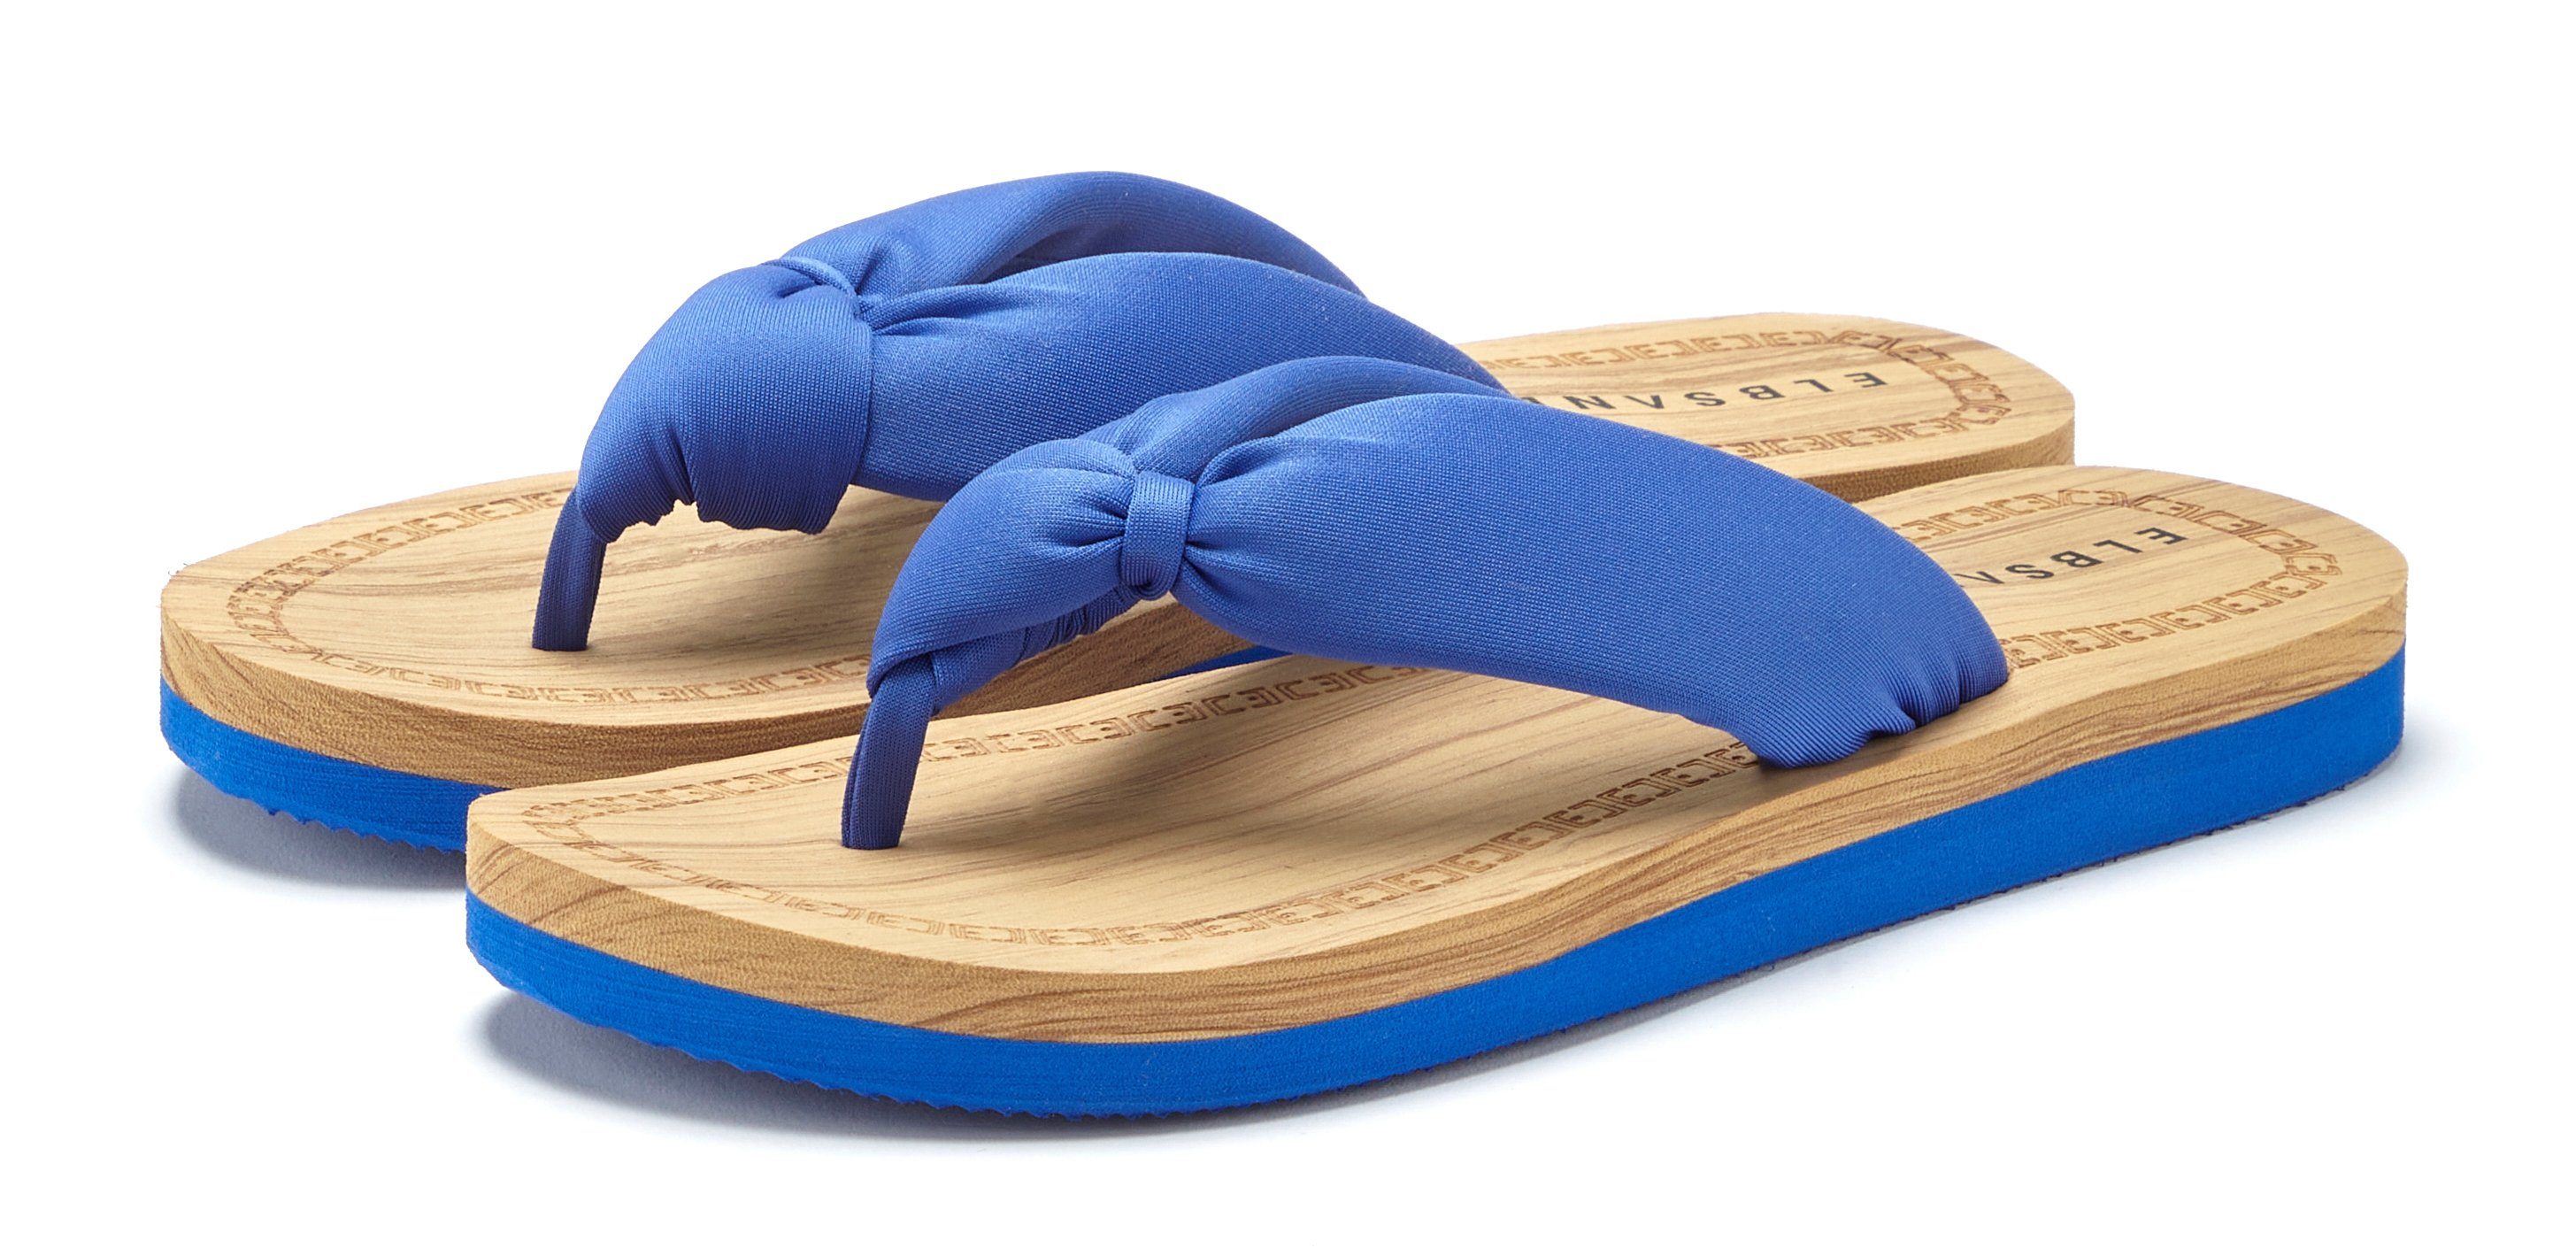 Elbsand Badezehentrenner Sandale, Pantolette, Badeschuh ultraleicht VEGAN blau